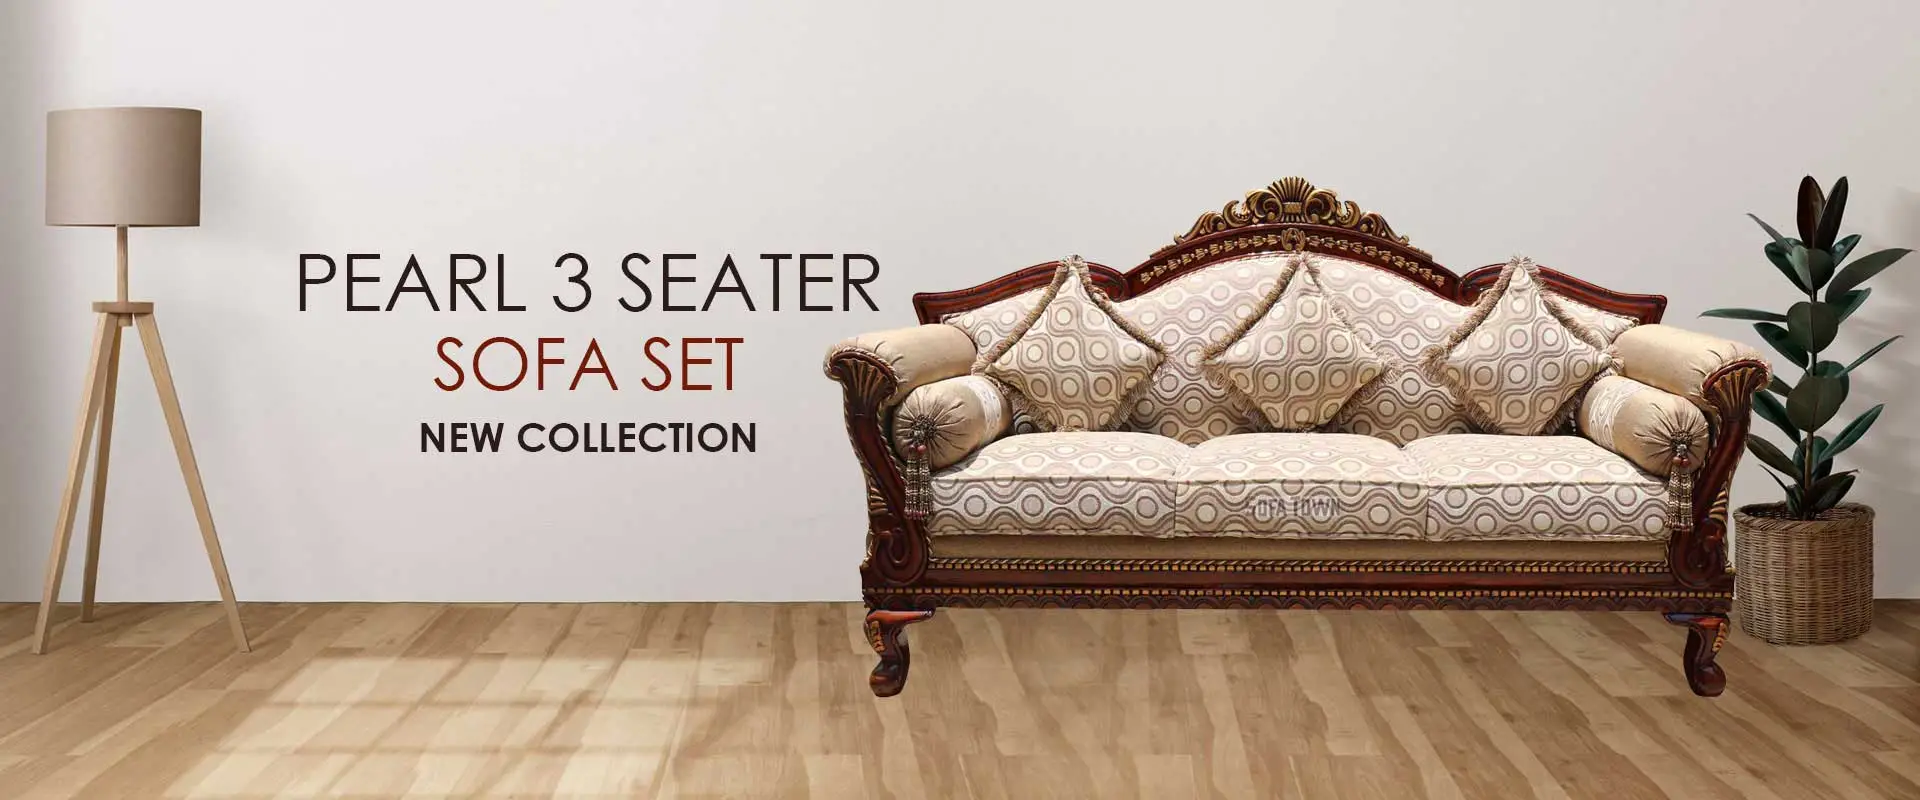 Pearl 3 Seater Sofa Set  Manufacturers in Katni